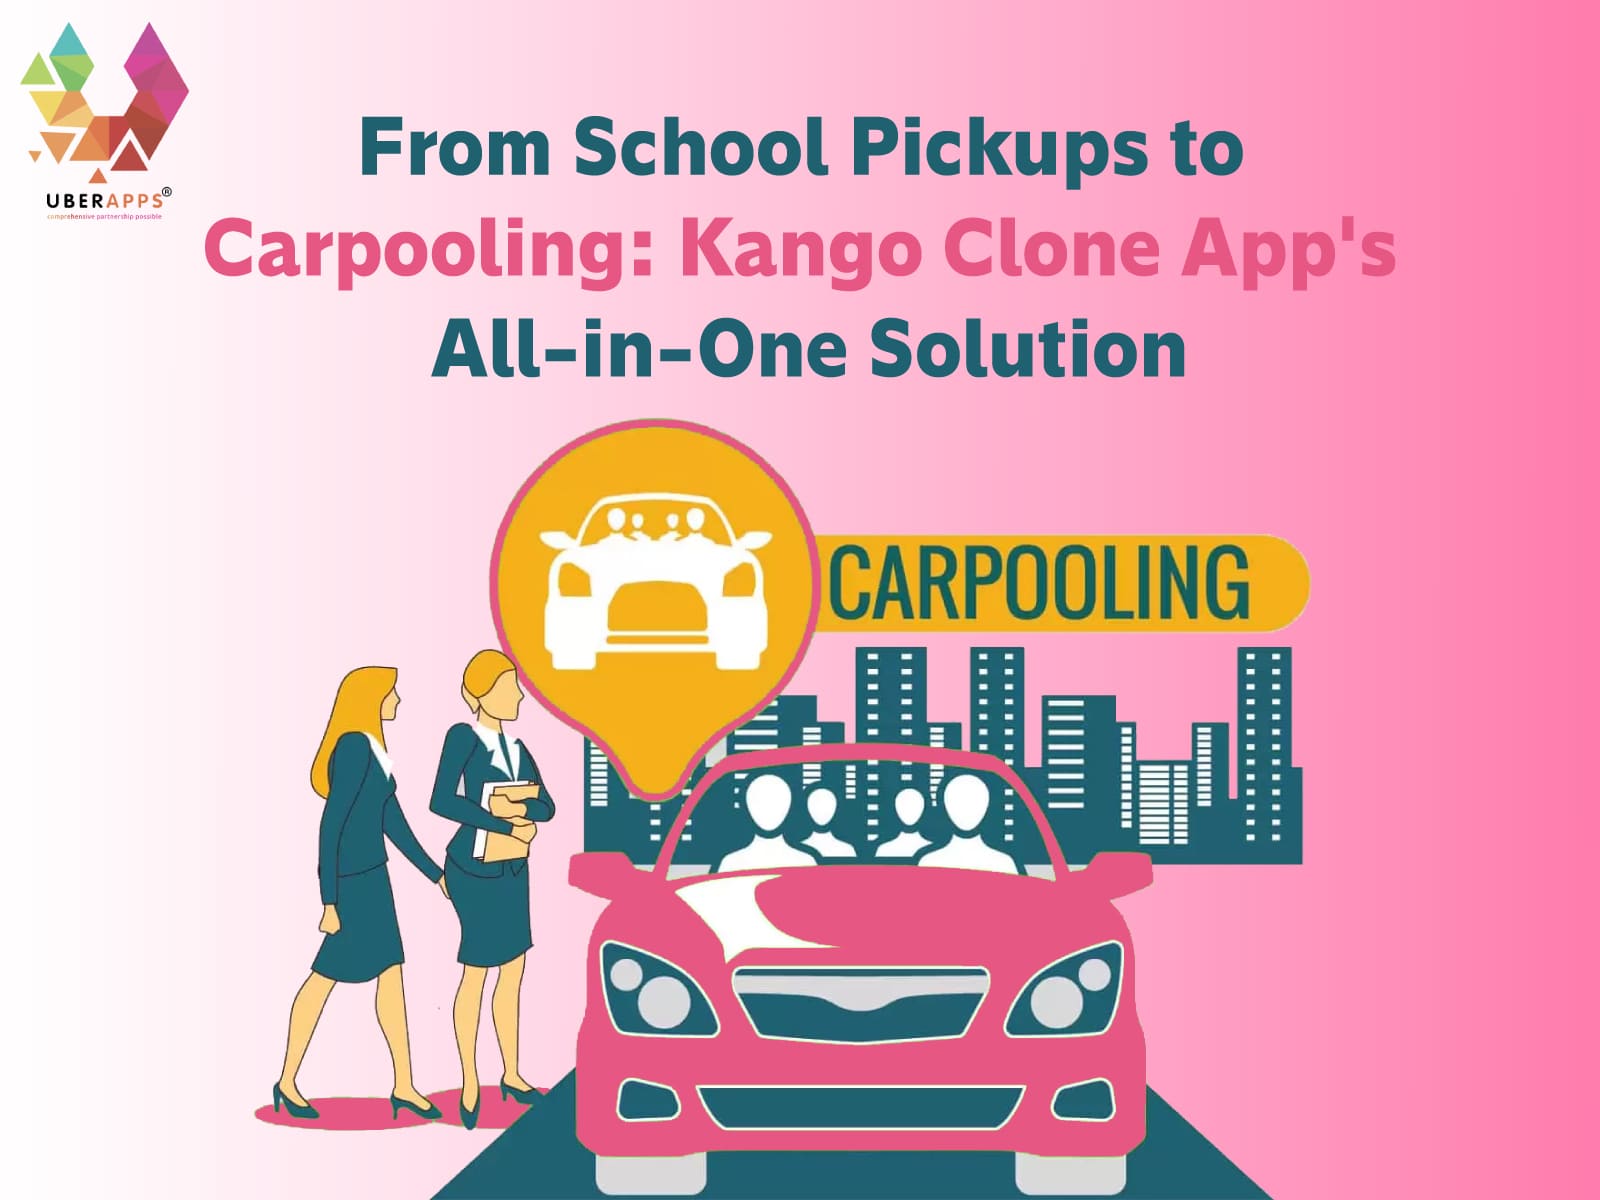 Kango clone app